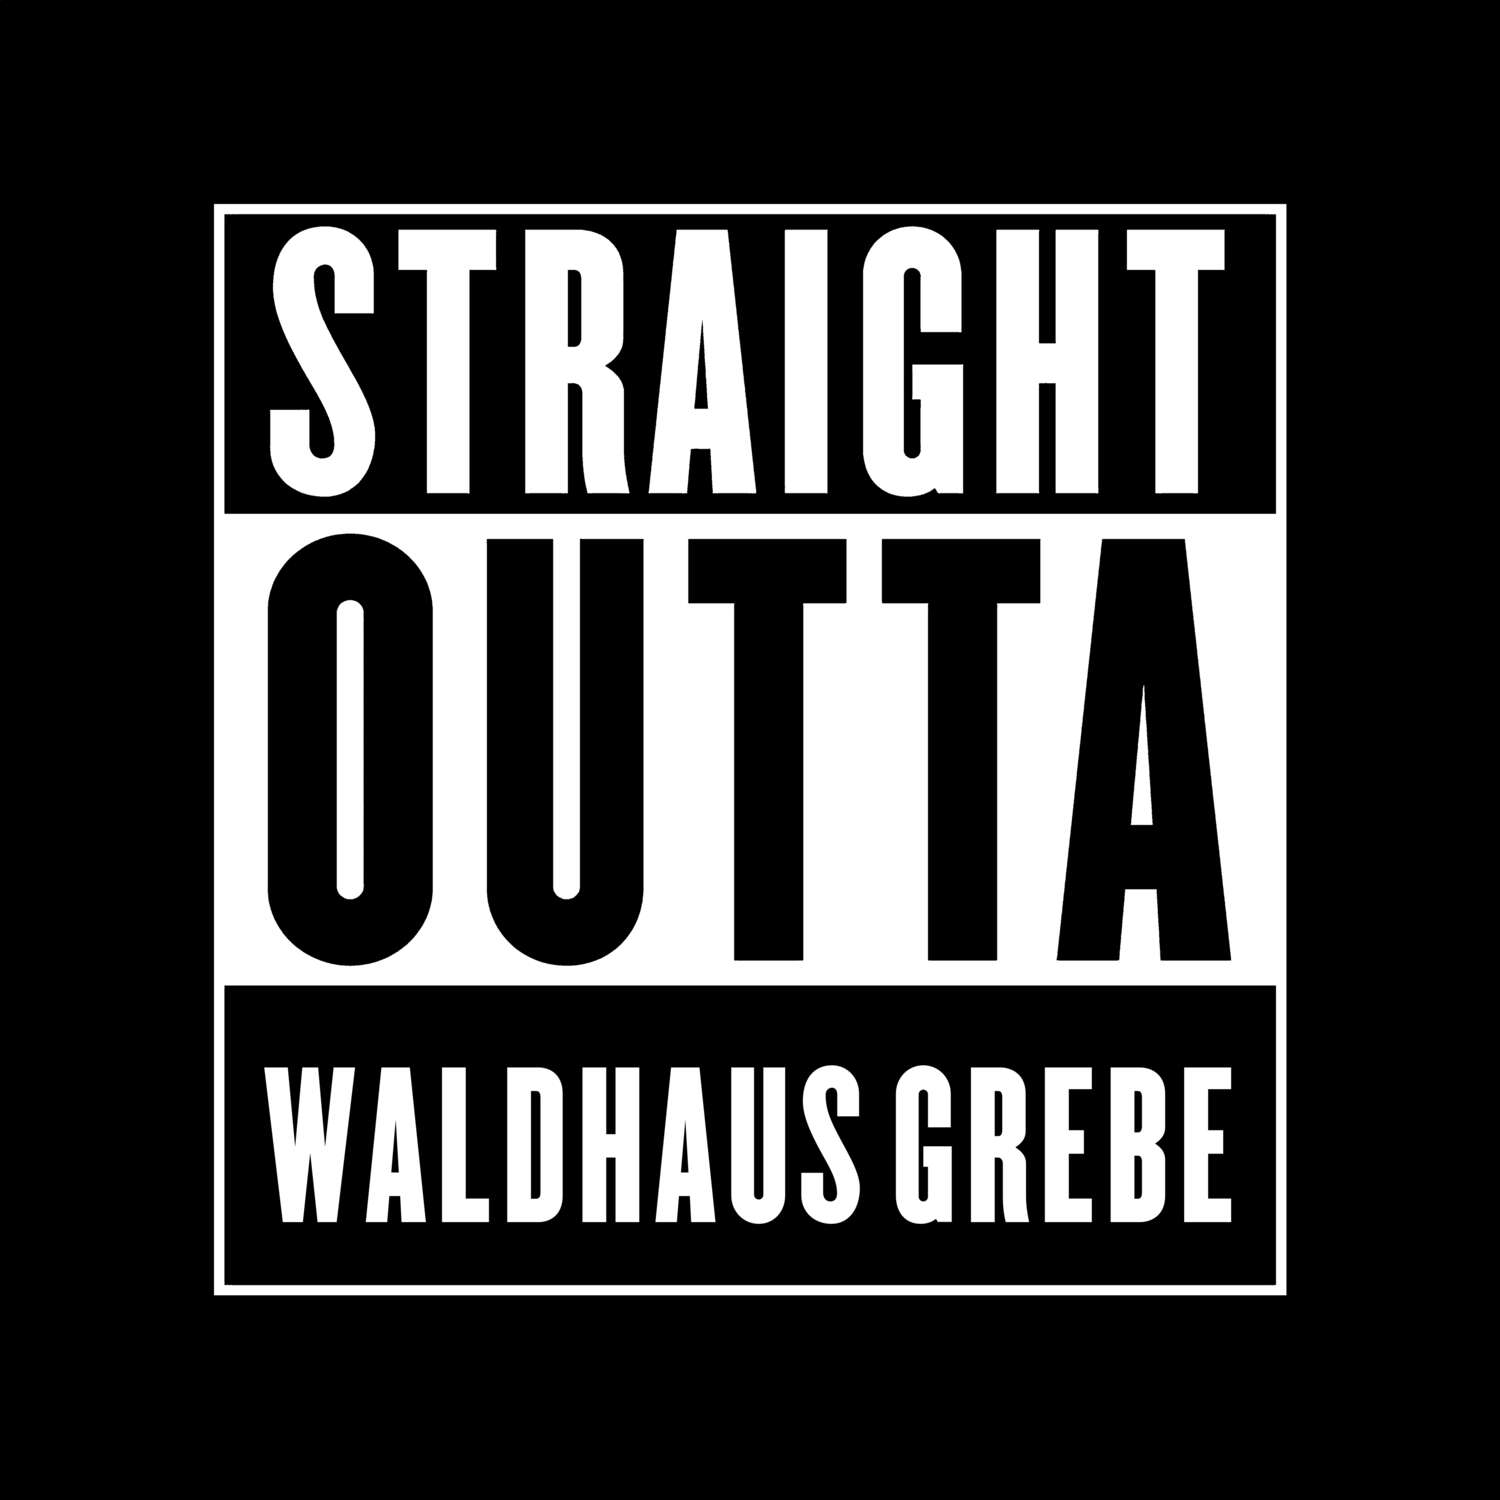 Waldhaus Grebe T-Shirt »Straight Outta«